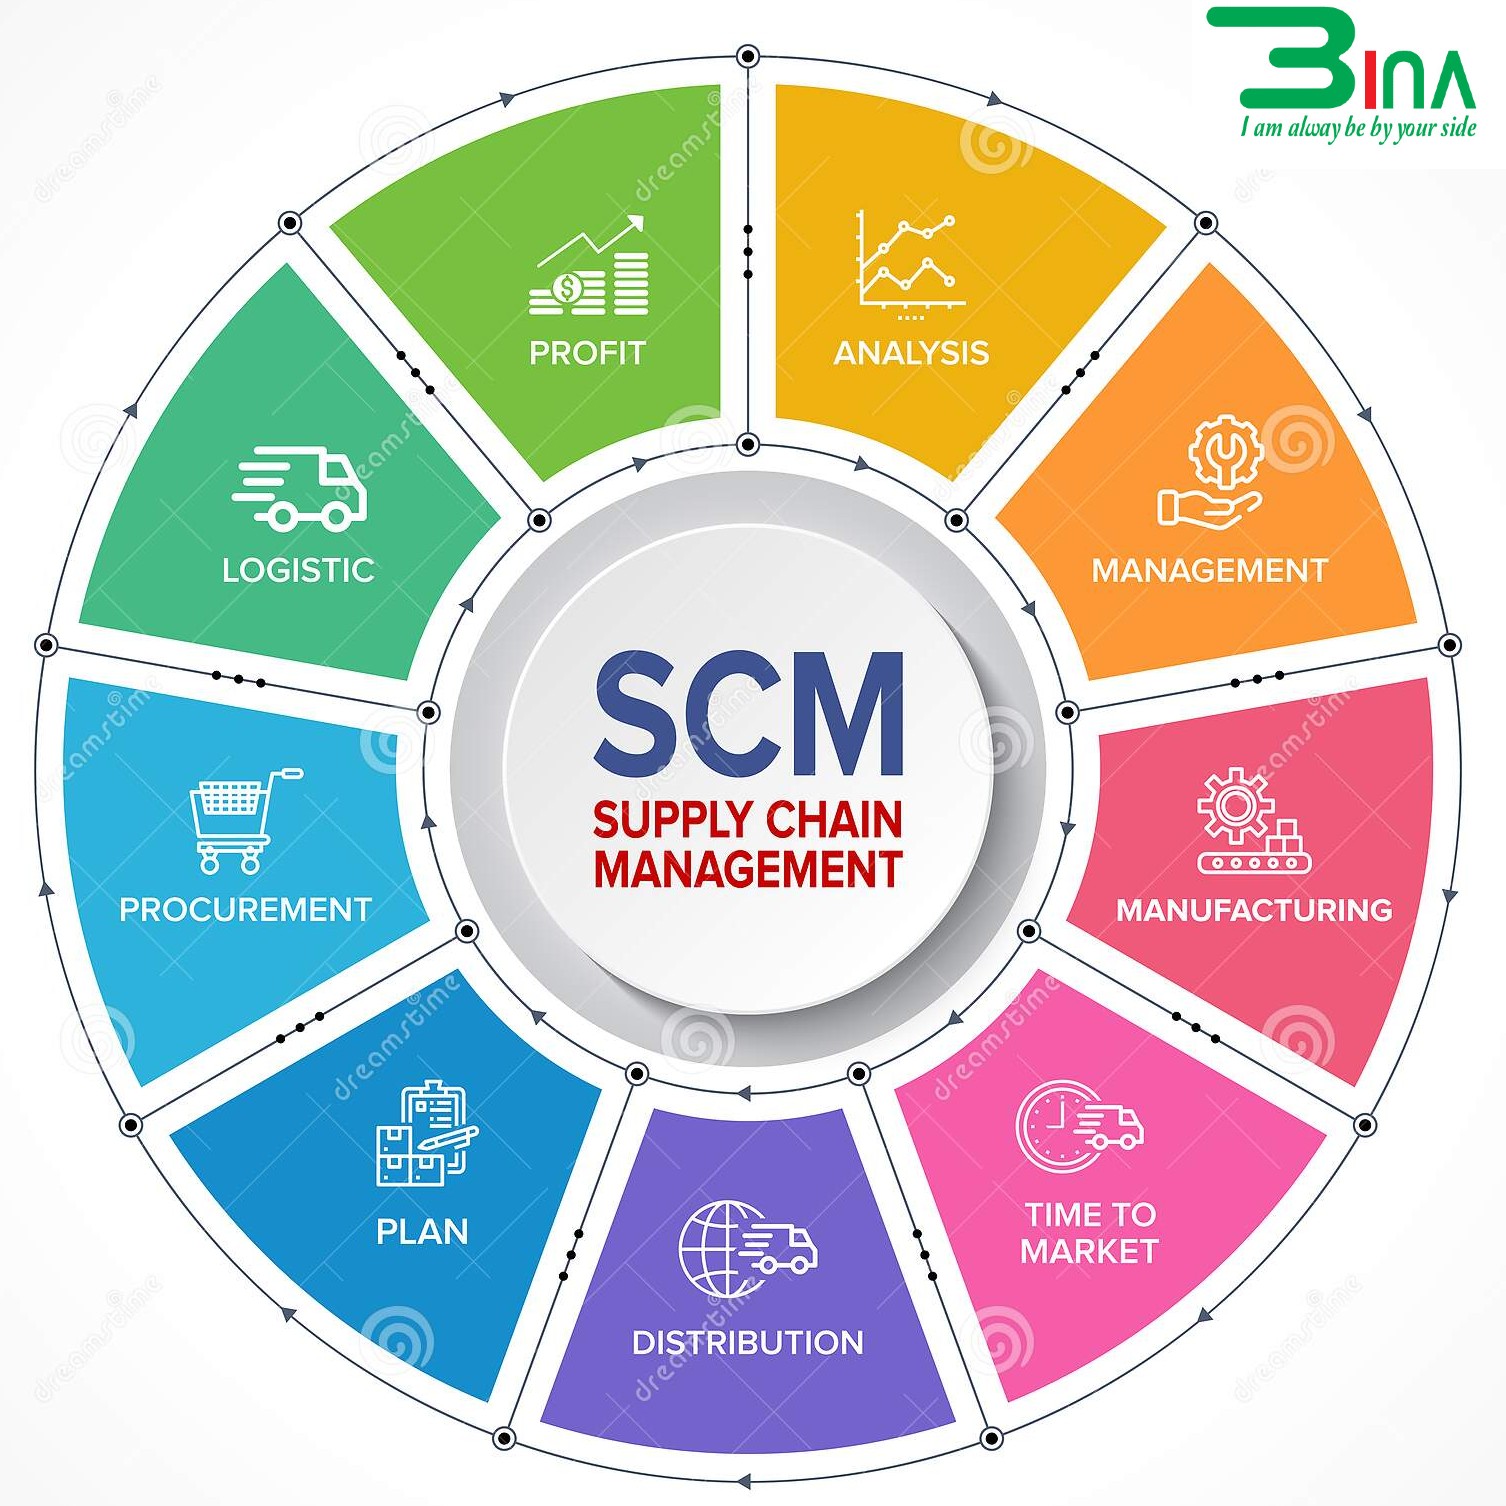 SCM Supply chain